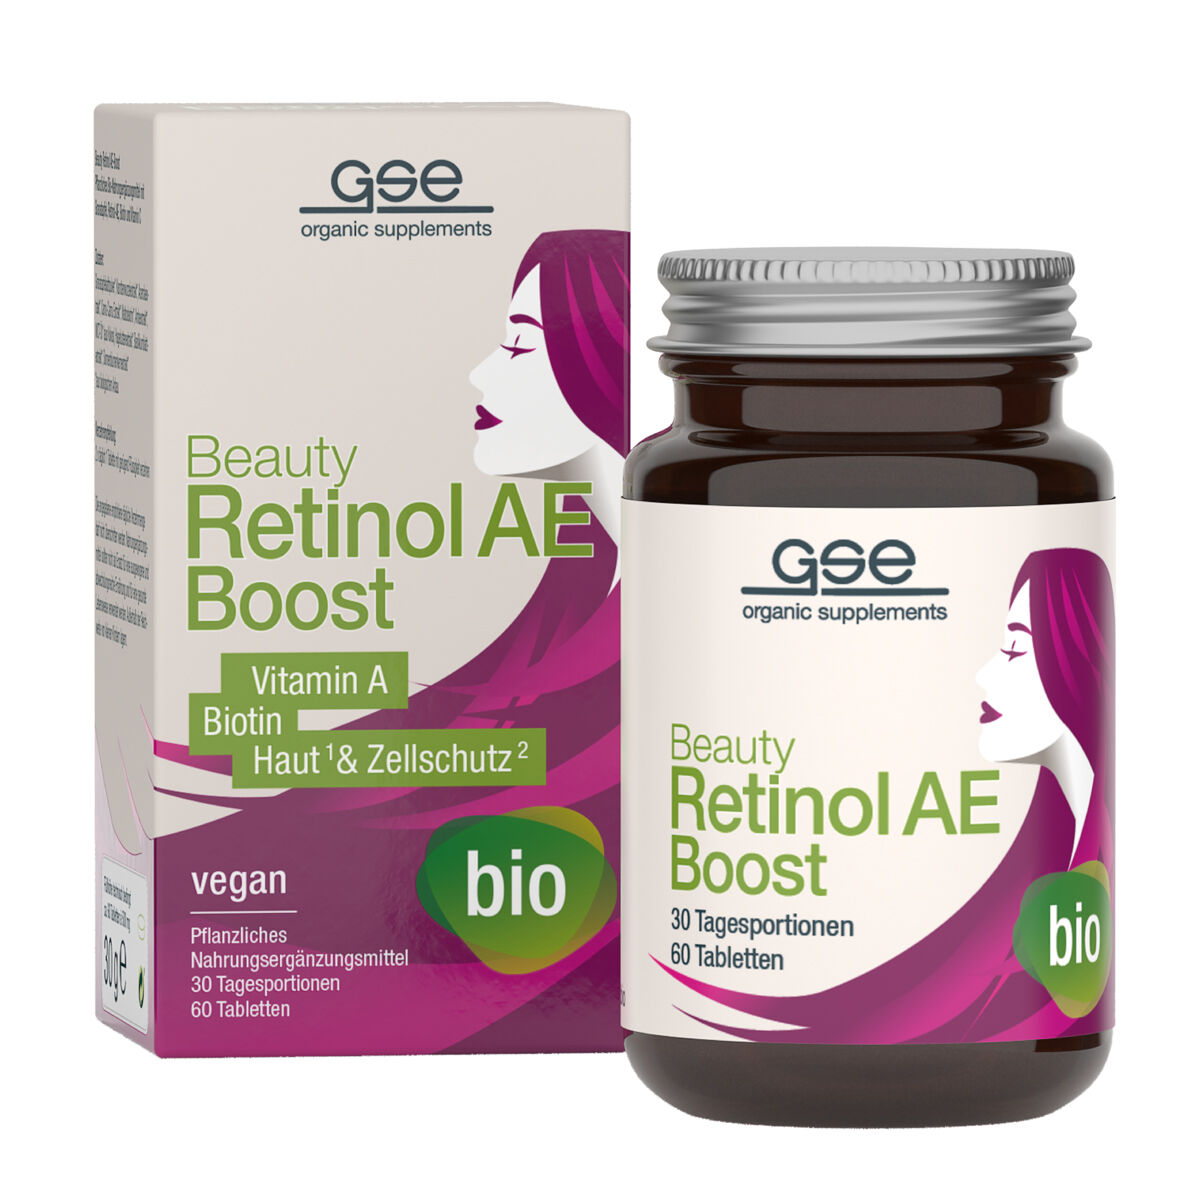 Beauty Retinol-AE Boost (Bio)